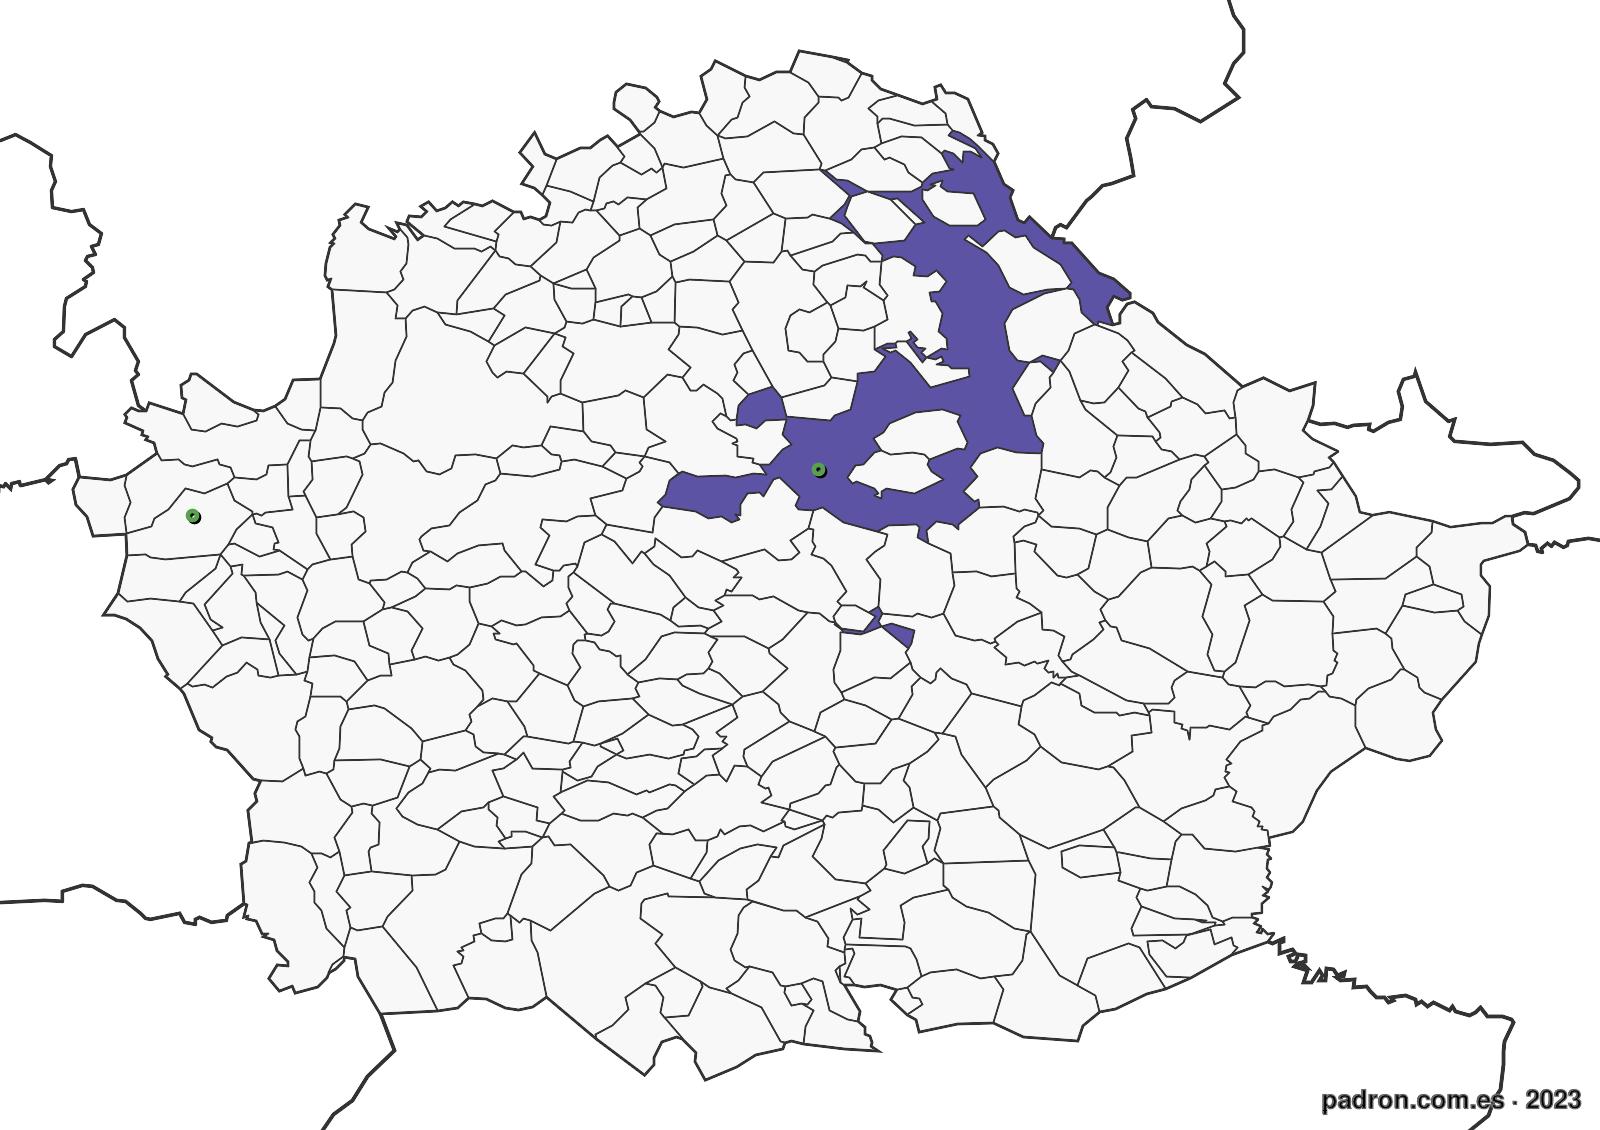 albaneses en cuenca.